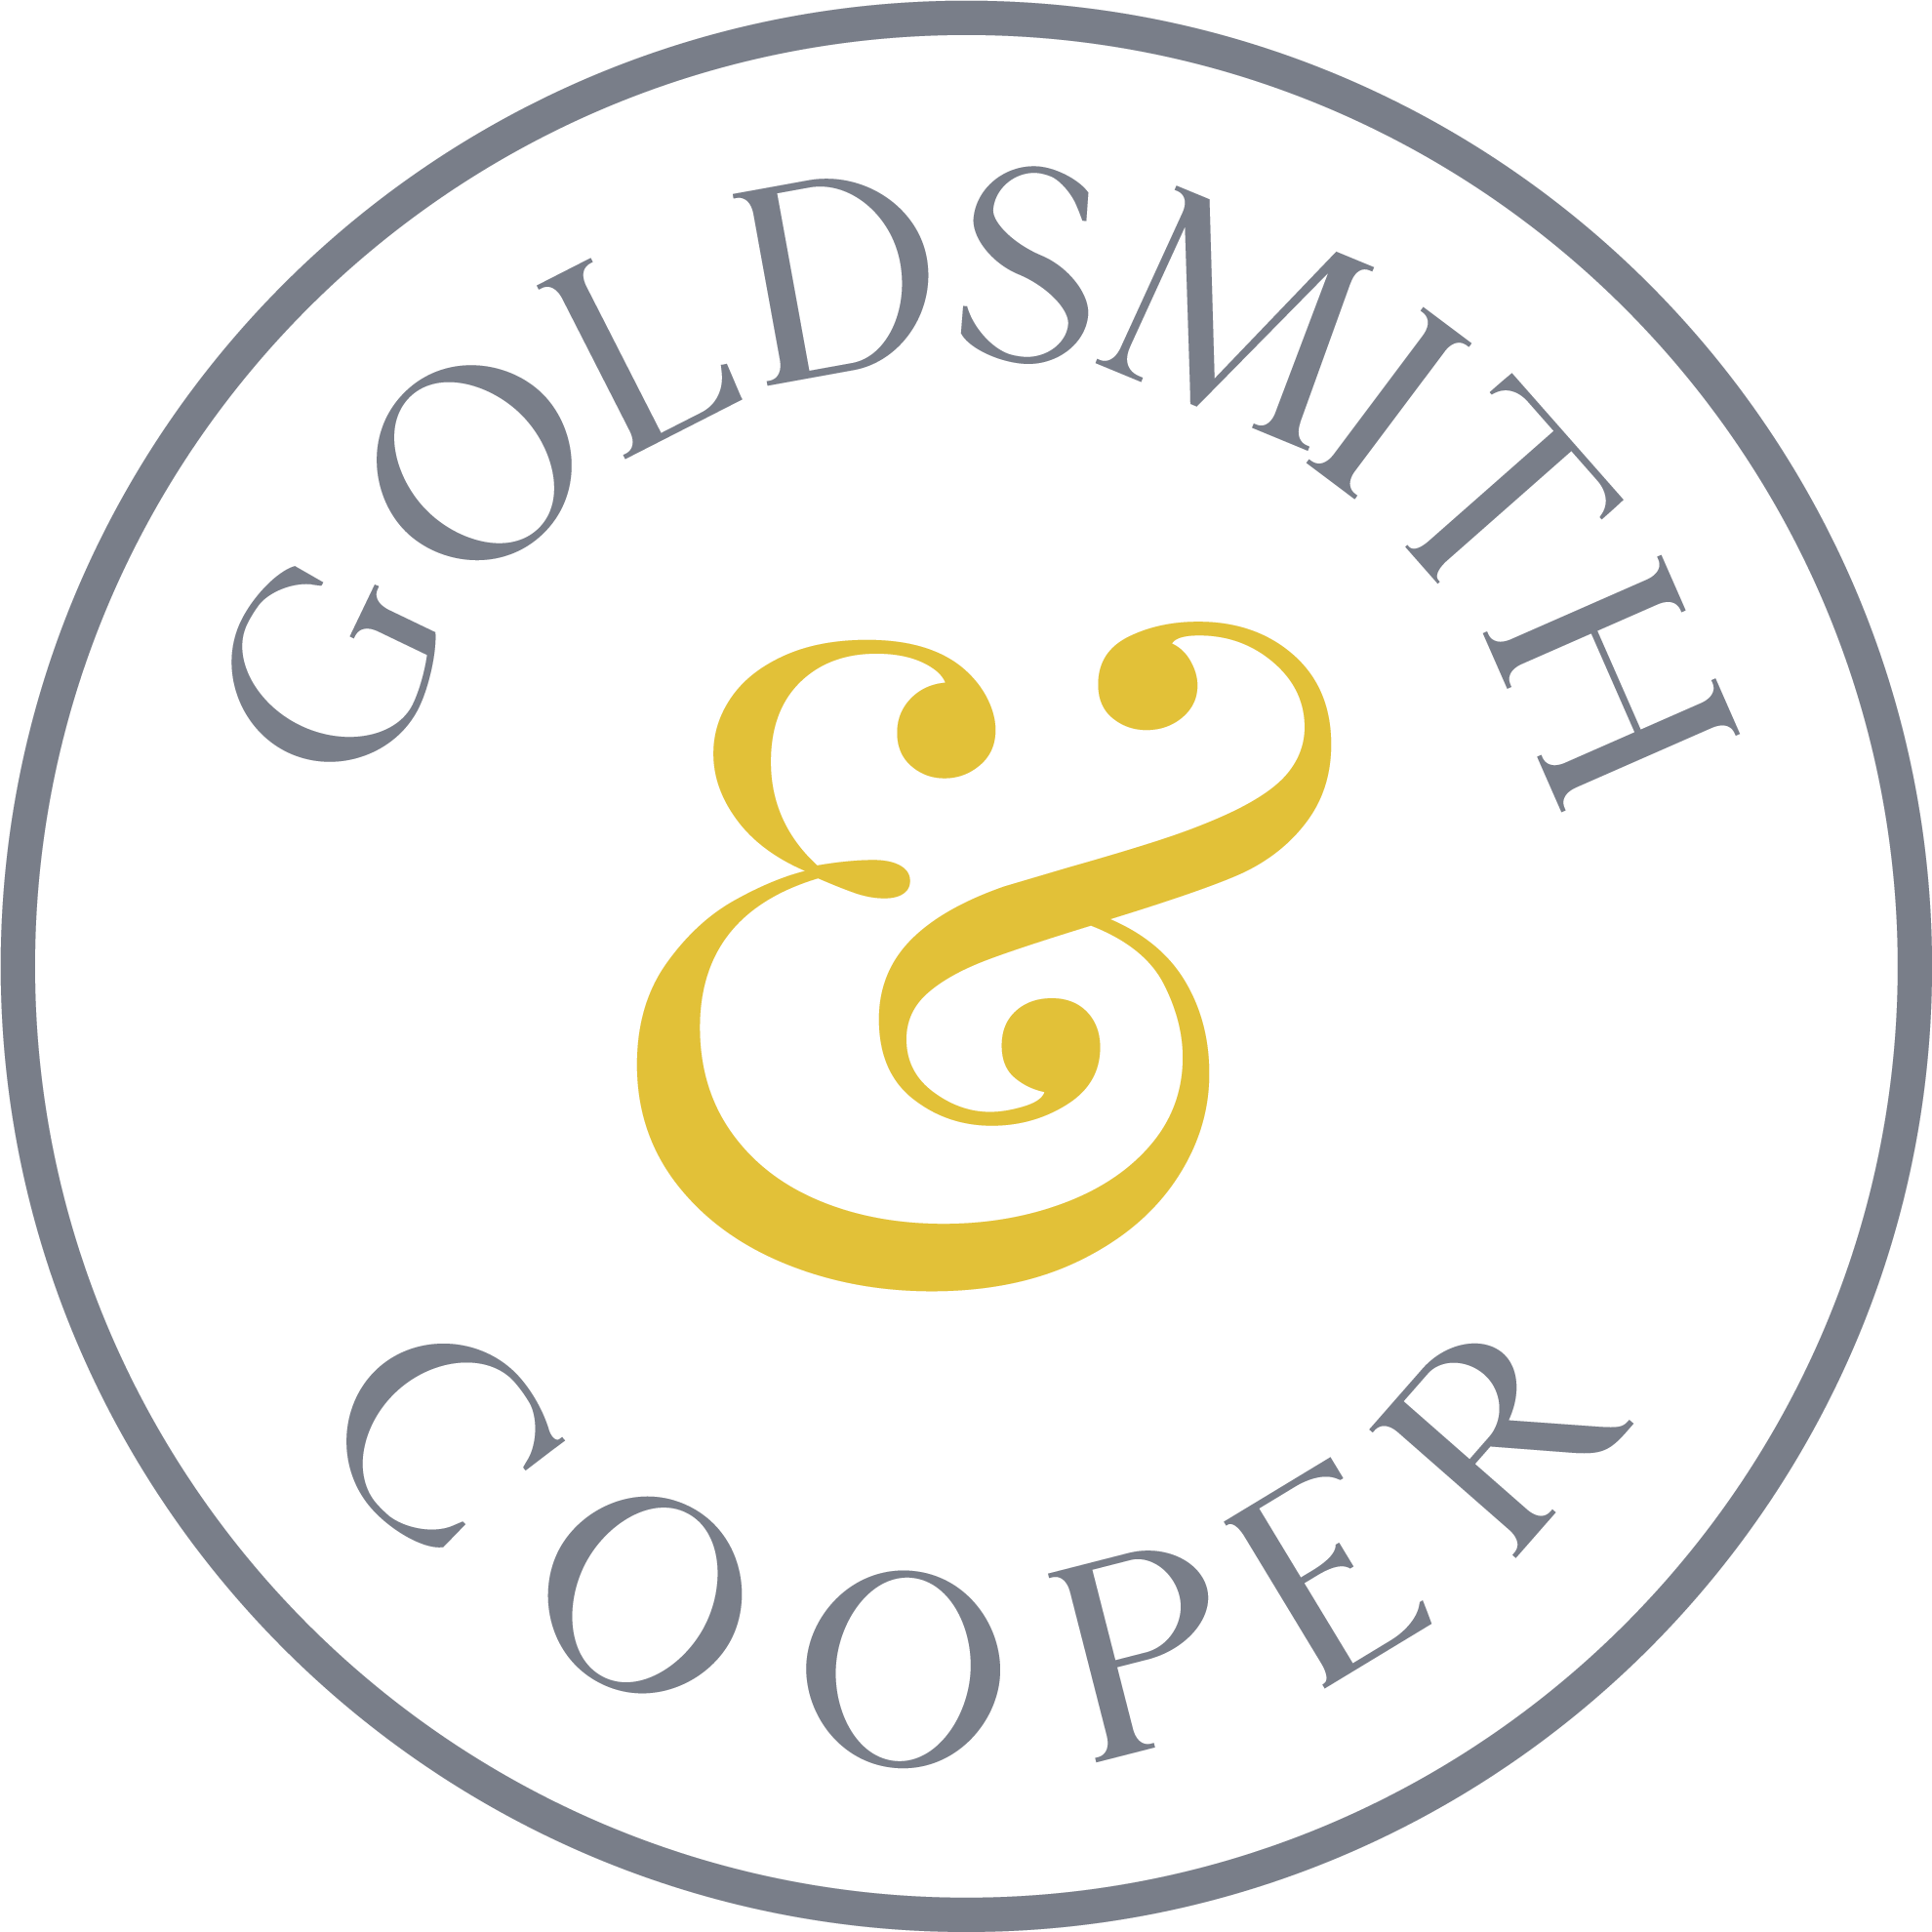 Goldsmith & Cooper